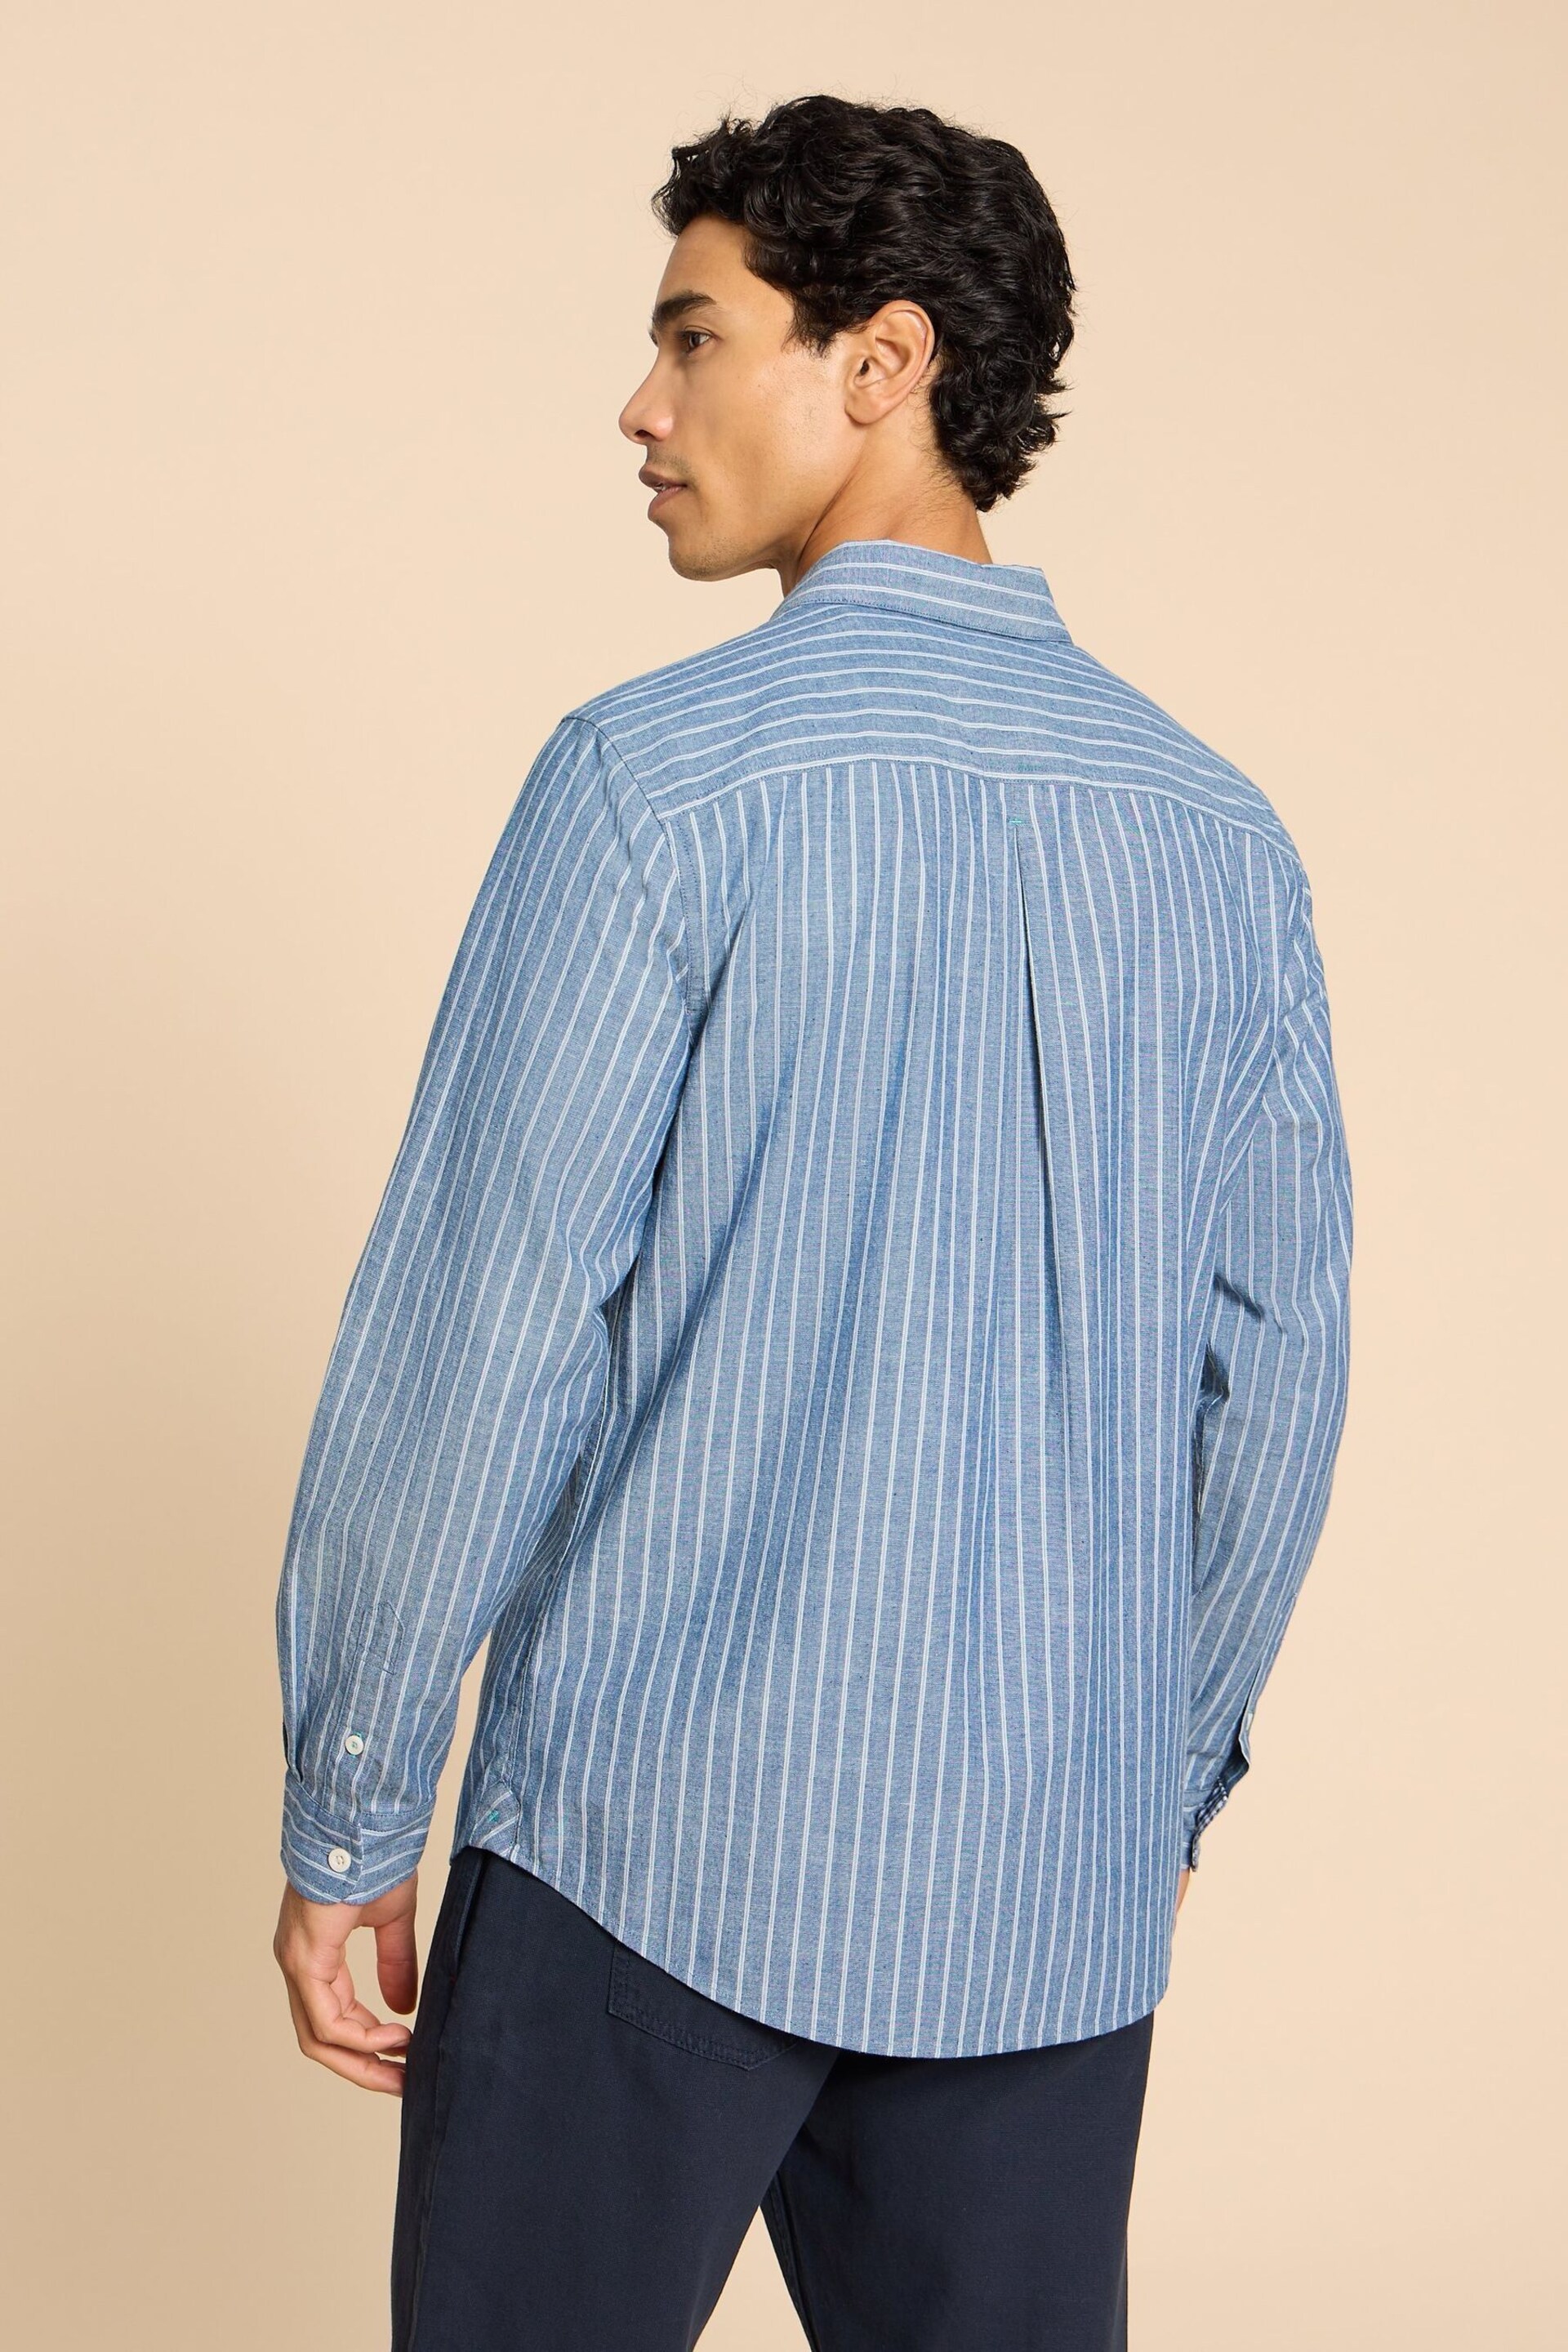 White Stuff Blue Stripe Long Sleeve Shirt - Image 2 of 7